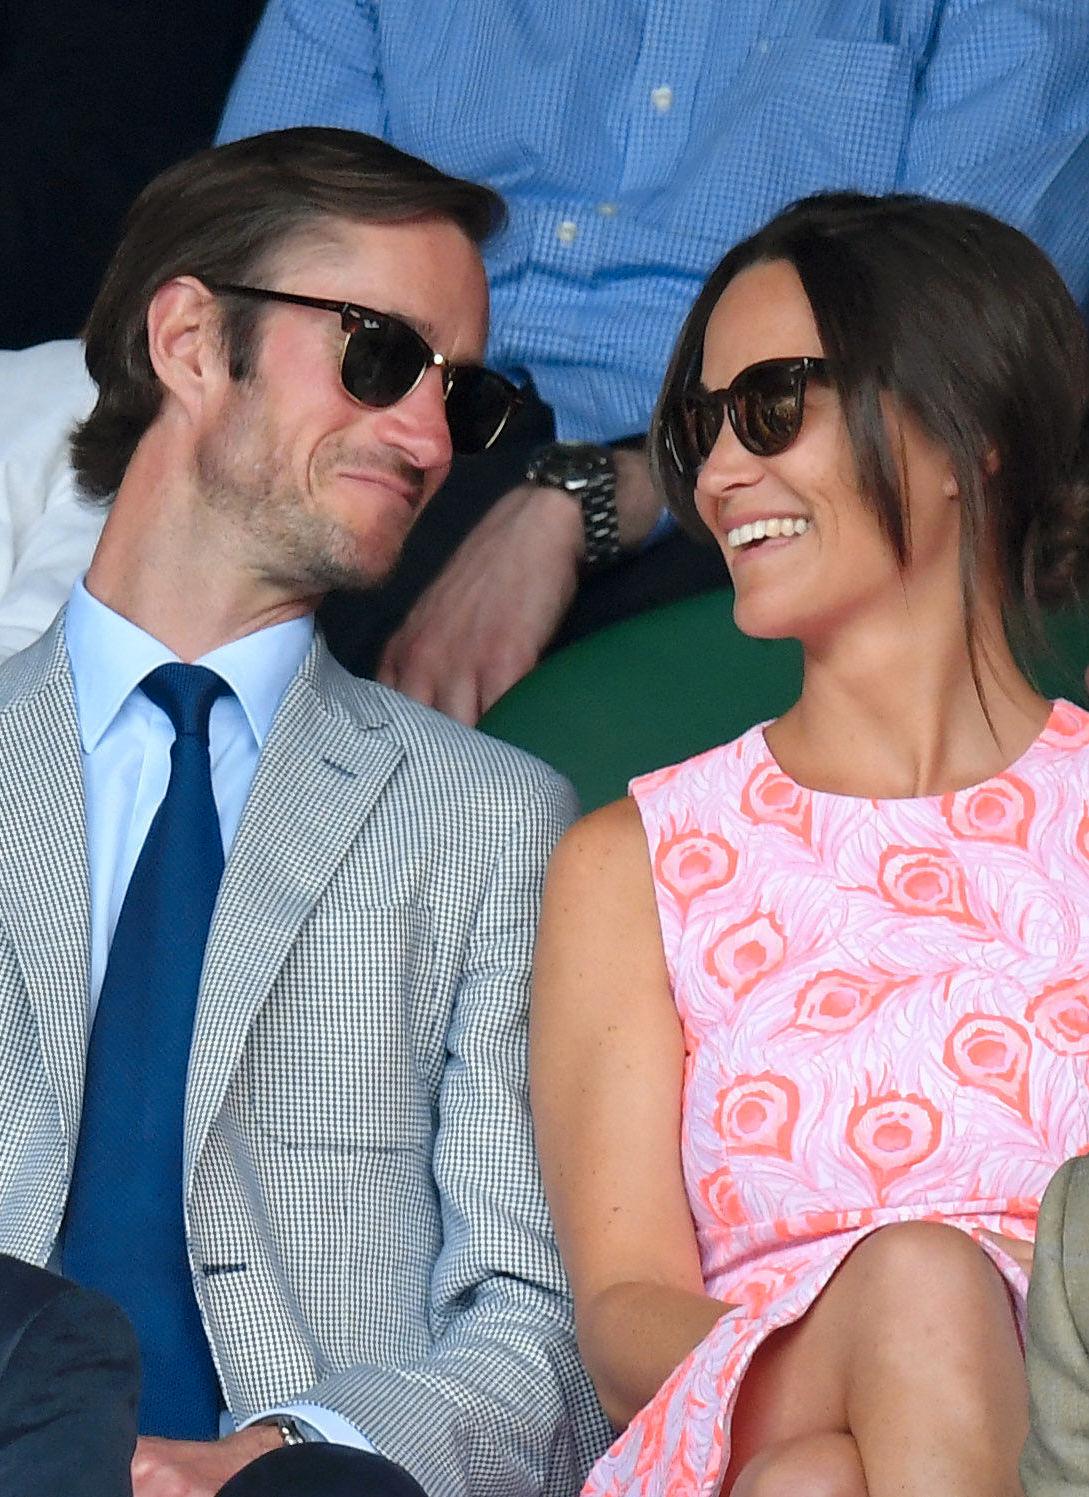 GIFTEKLARE: Pippa og James har bekreftet at de er forlovet og gifter seg i løpet av neste år. Her er de to på tribunen under Wimbledon-turneringen tidligere i juli. Foto: Getty Images